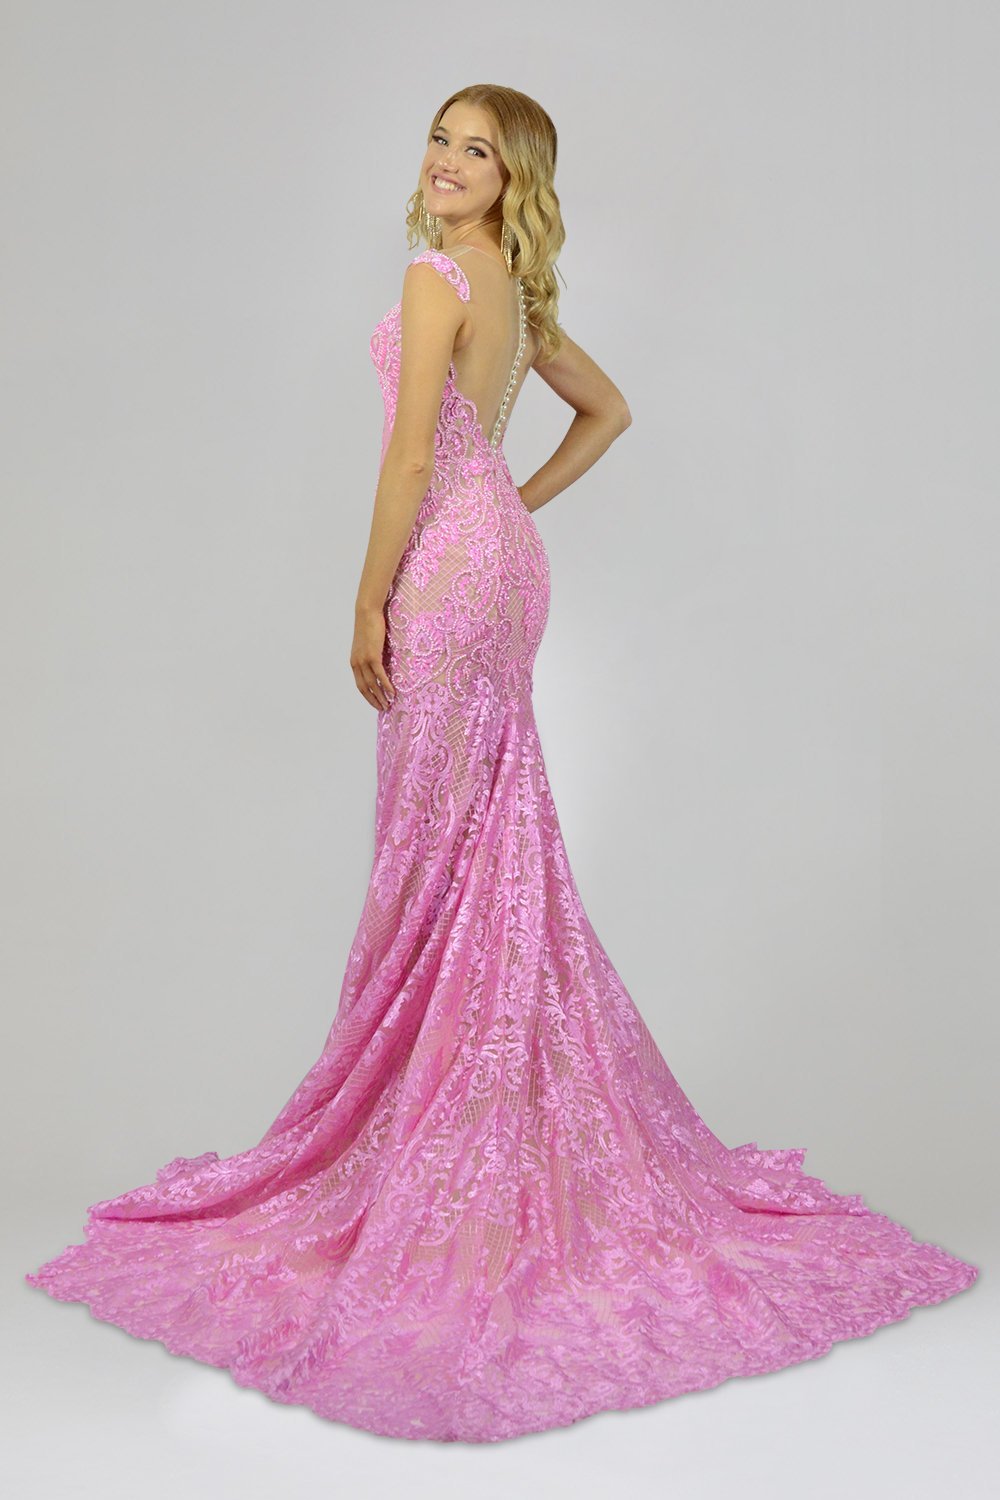 pink lace wedding dress australia custom made envious bridal & formal